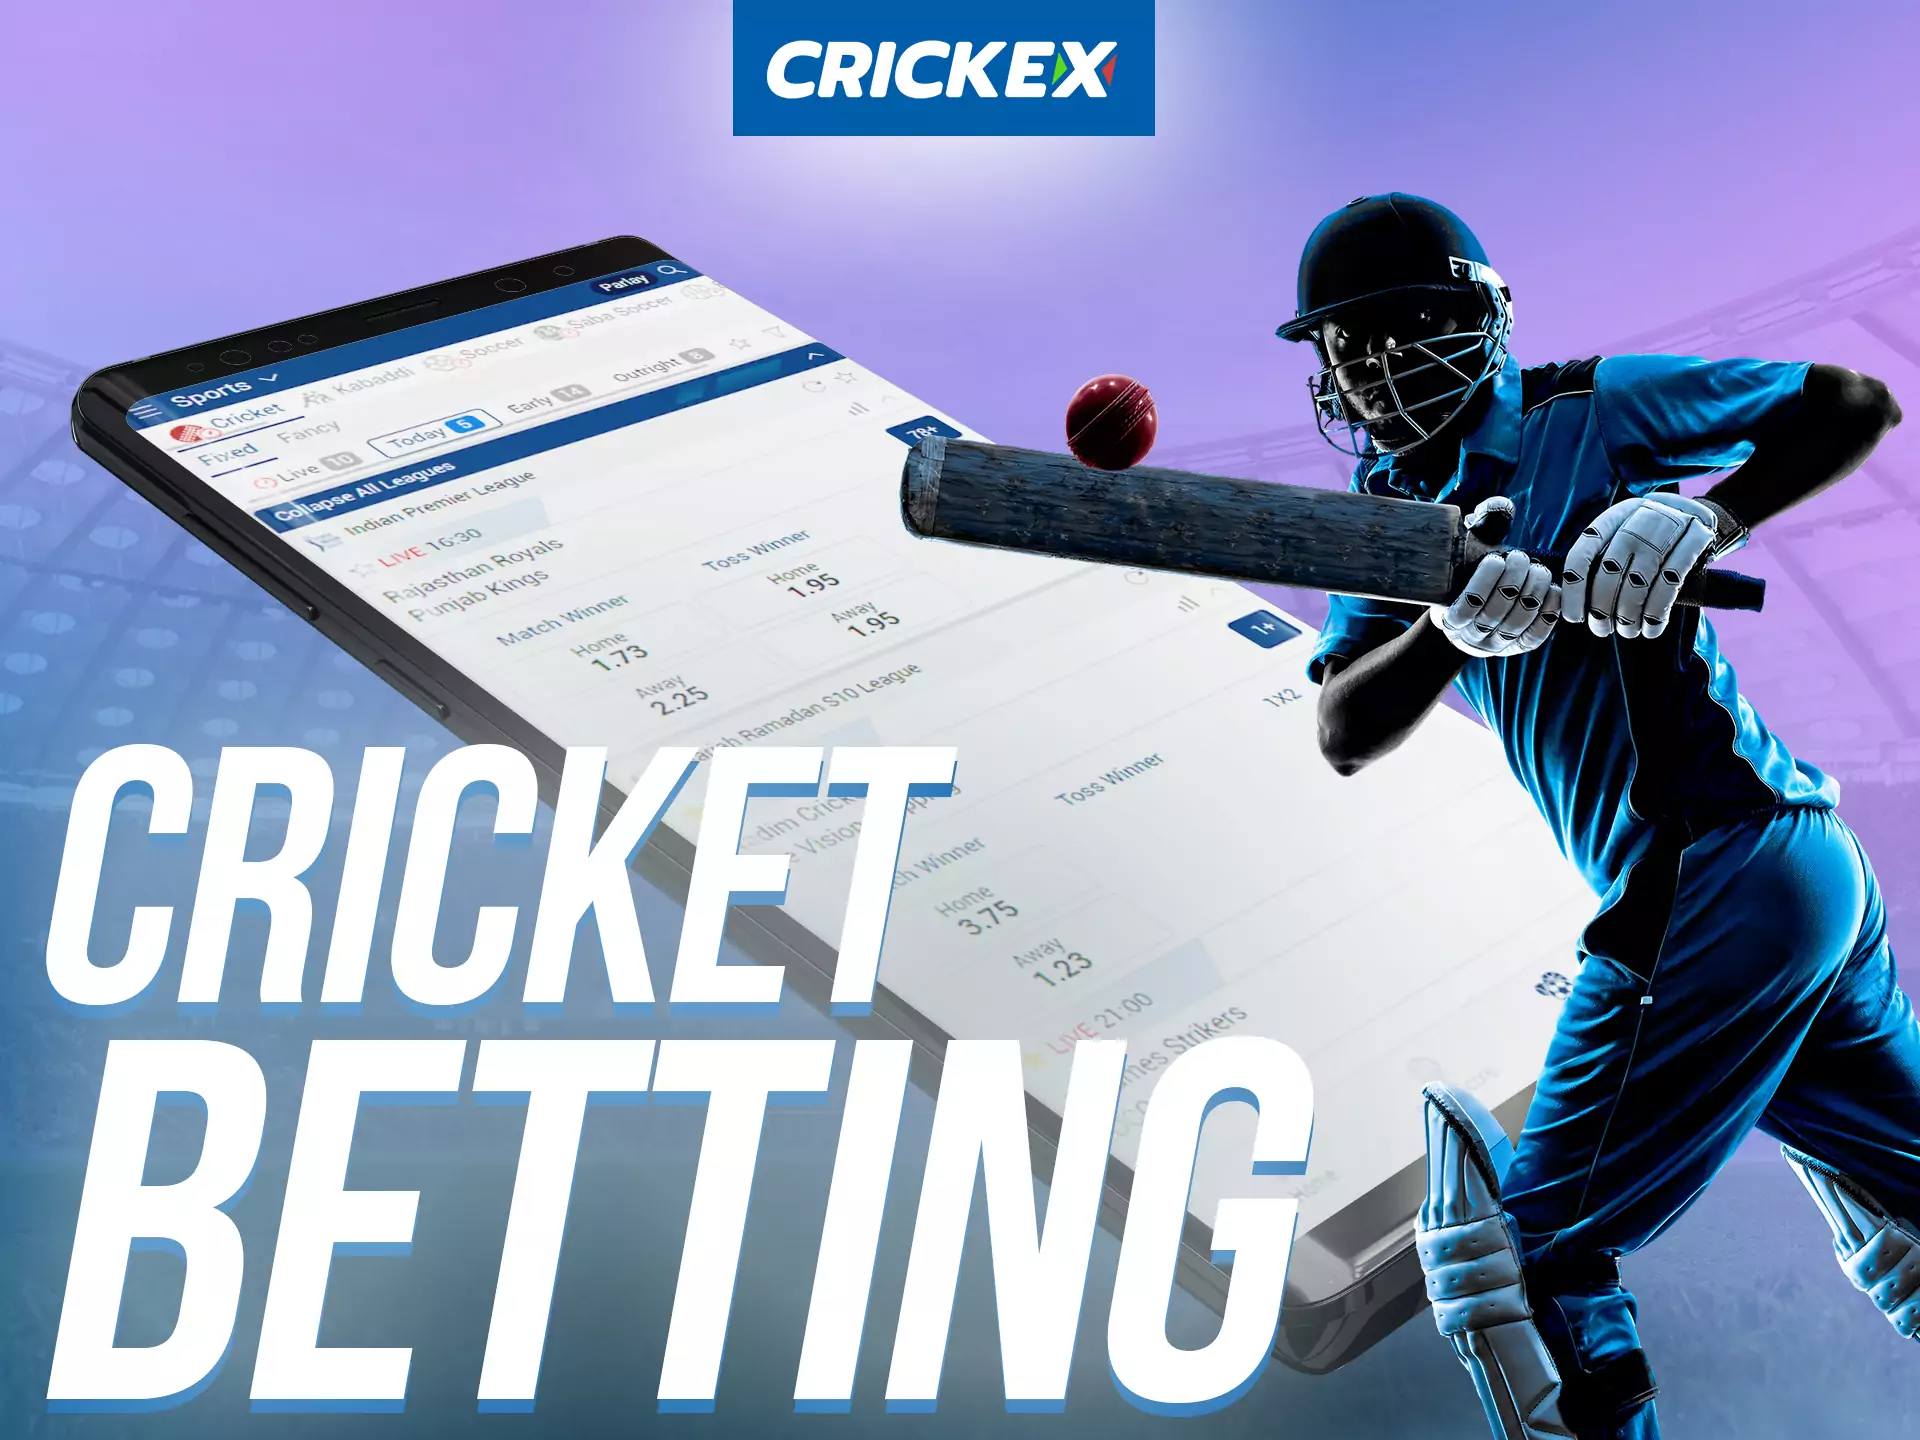 Bet on cricket in the Crickex app.